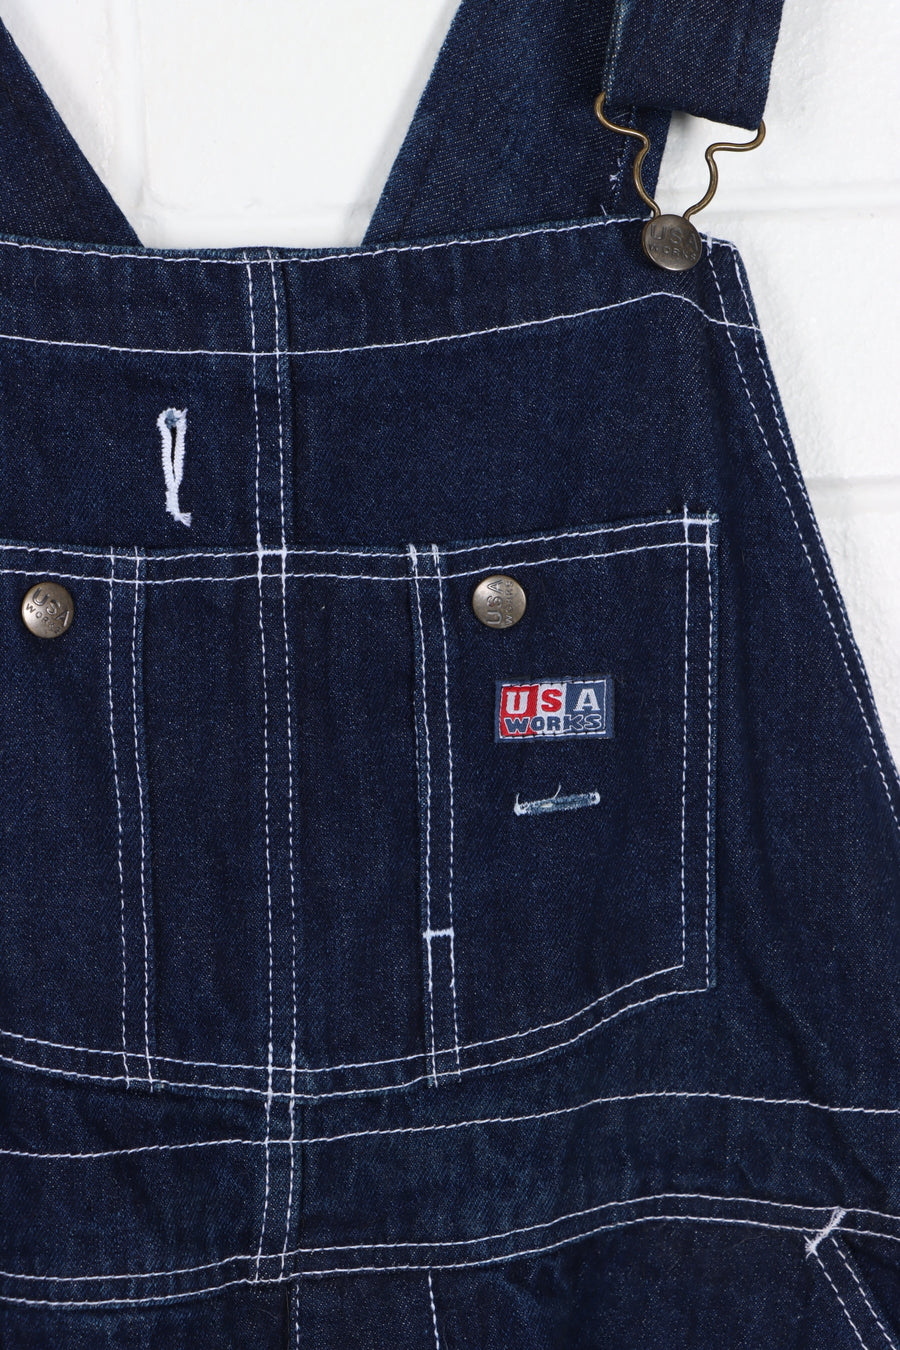 USA WORKS Contrast Stitching Denim Carpenter Overalls (M) - Vintage Sole Melbourne